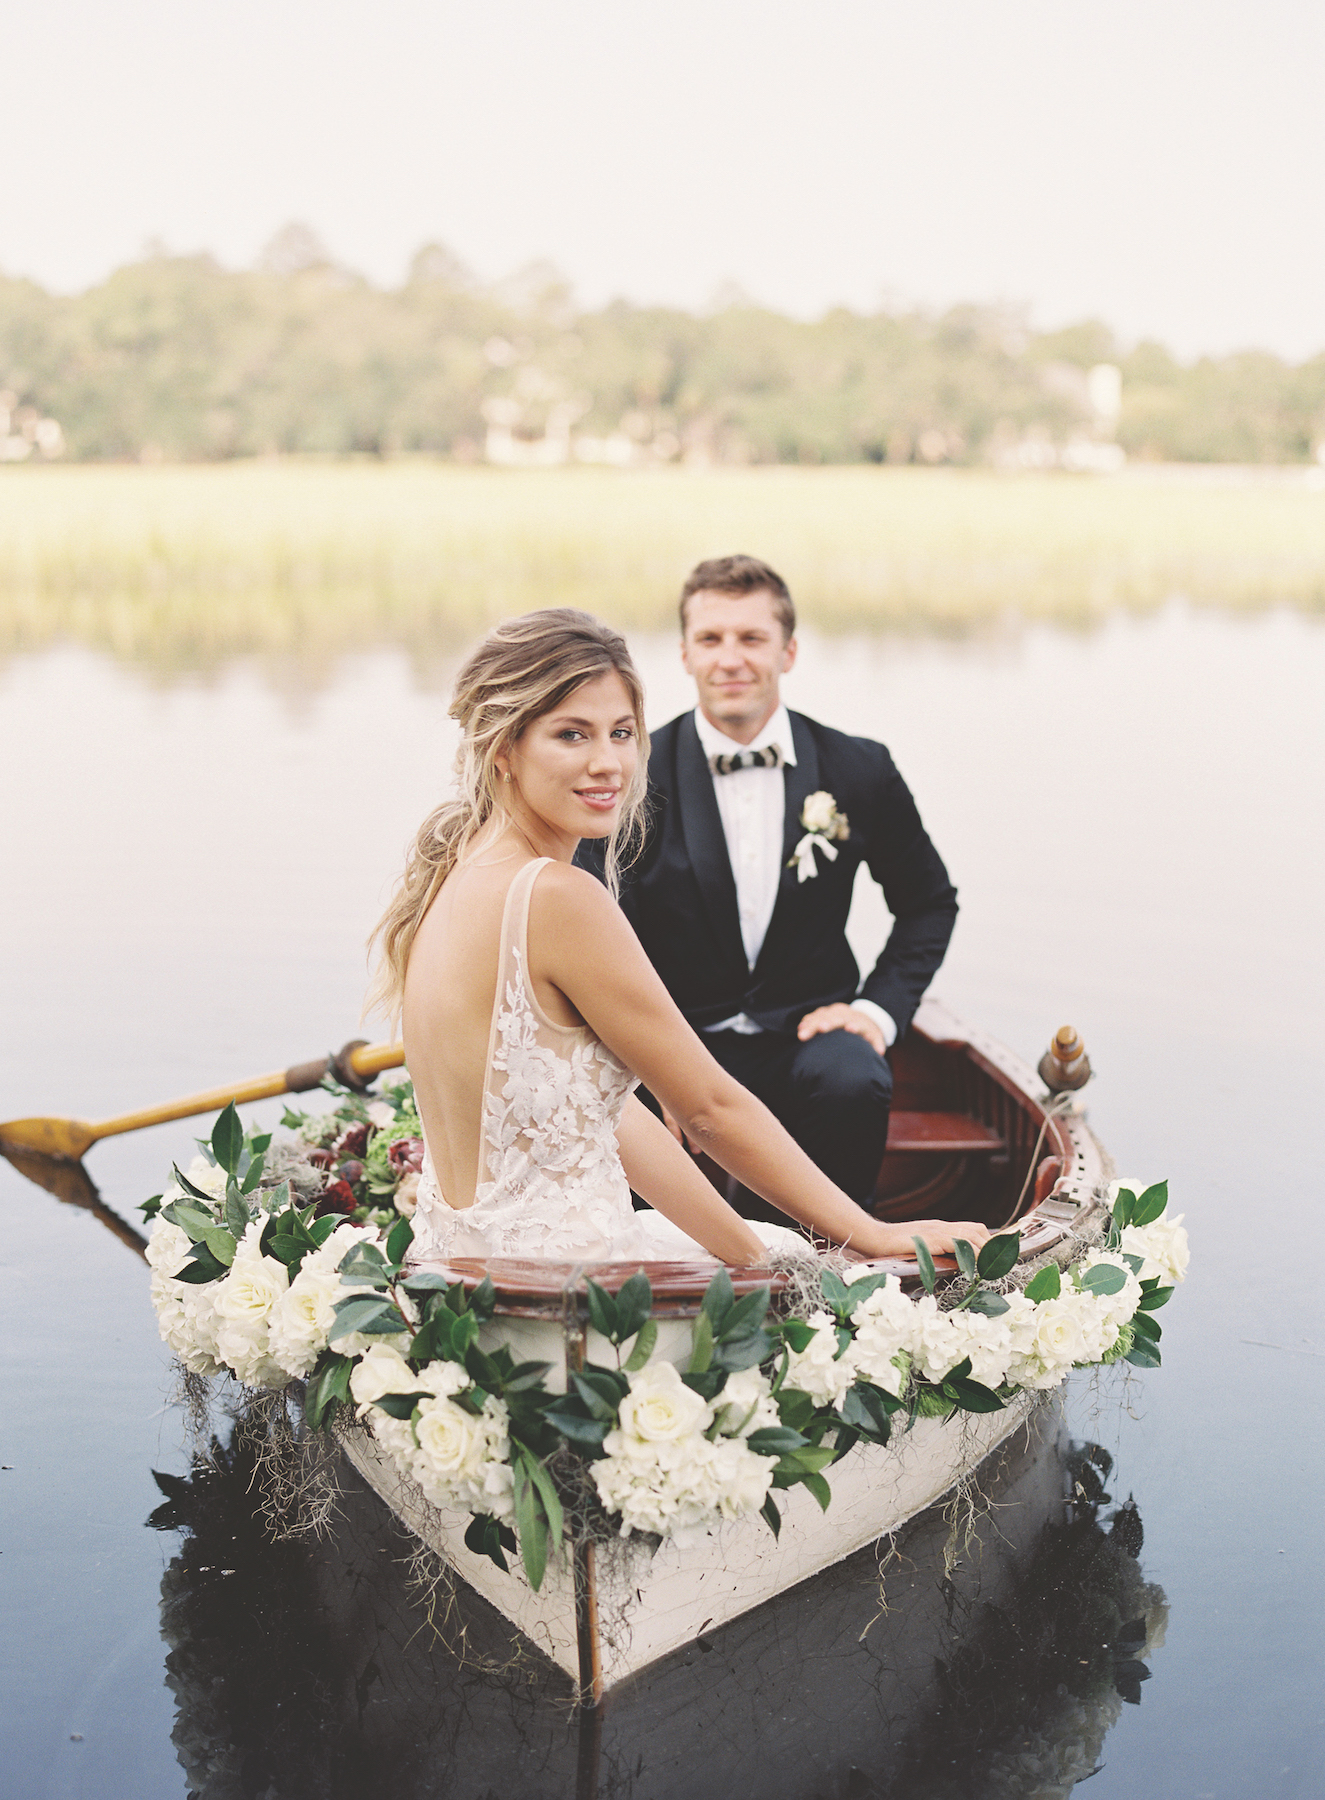 Charleston Wedding Venues - Guide - Destination Weddings - Explore Charleston